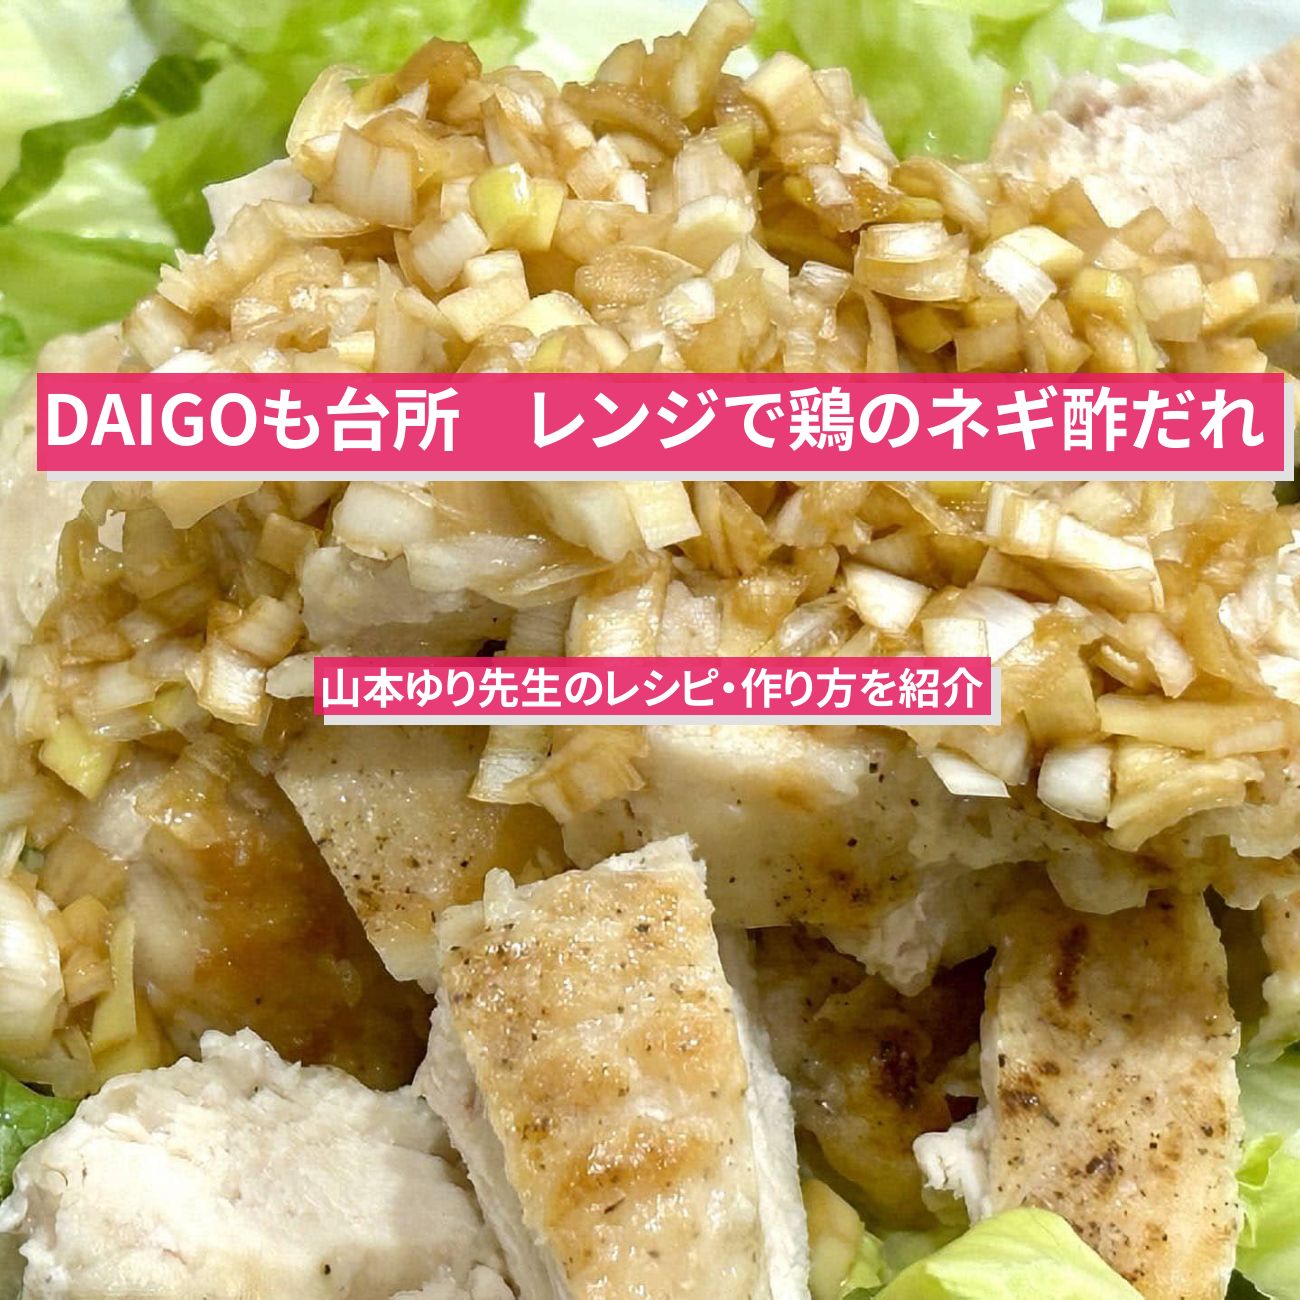 【DAIGOも台所】『レンジで鶏のネギ酢だれ』山本ゆり先生のレシピ・作り方を紹介